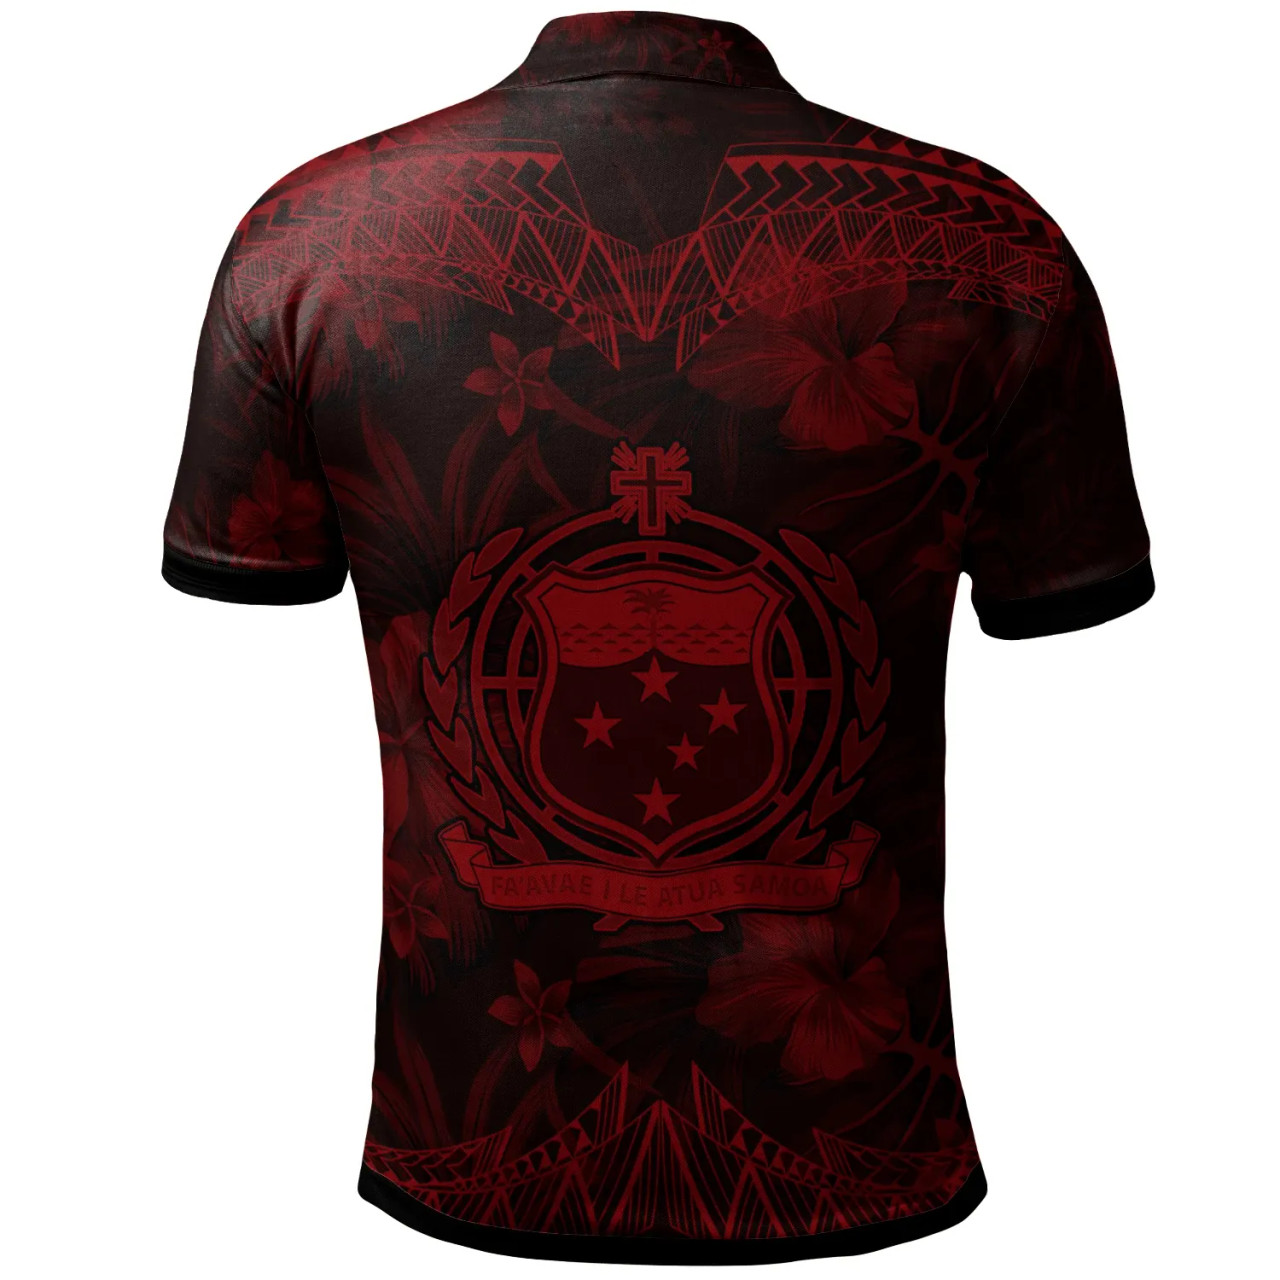 Samoa Polo Shirt -  Keep Calm Style Red Patterns 2